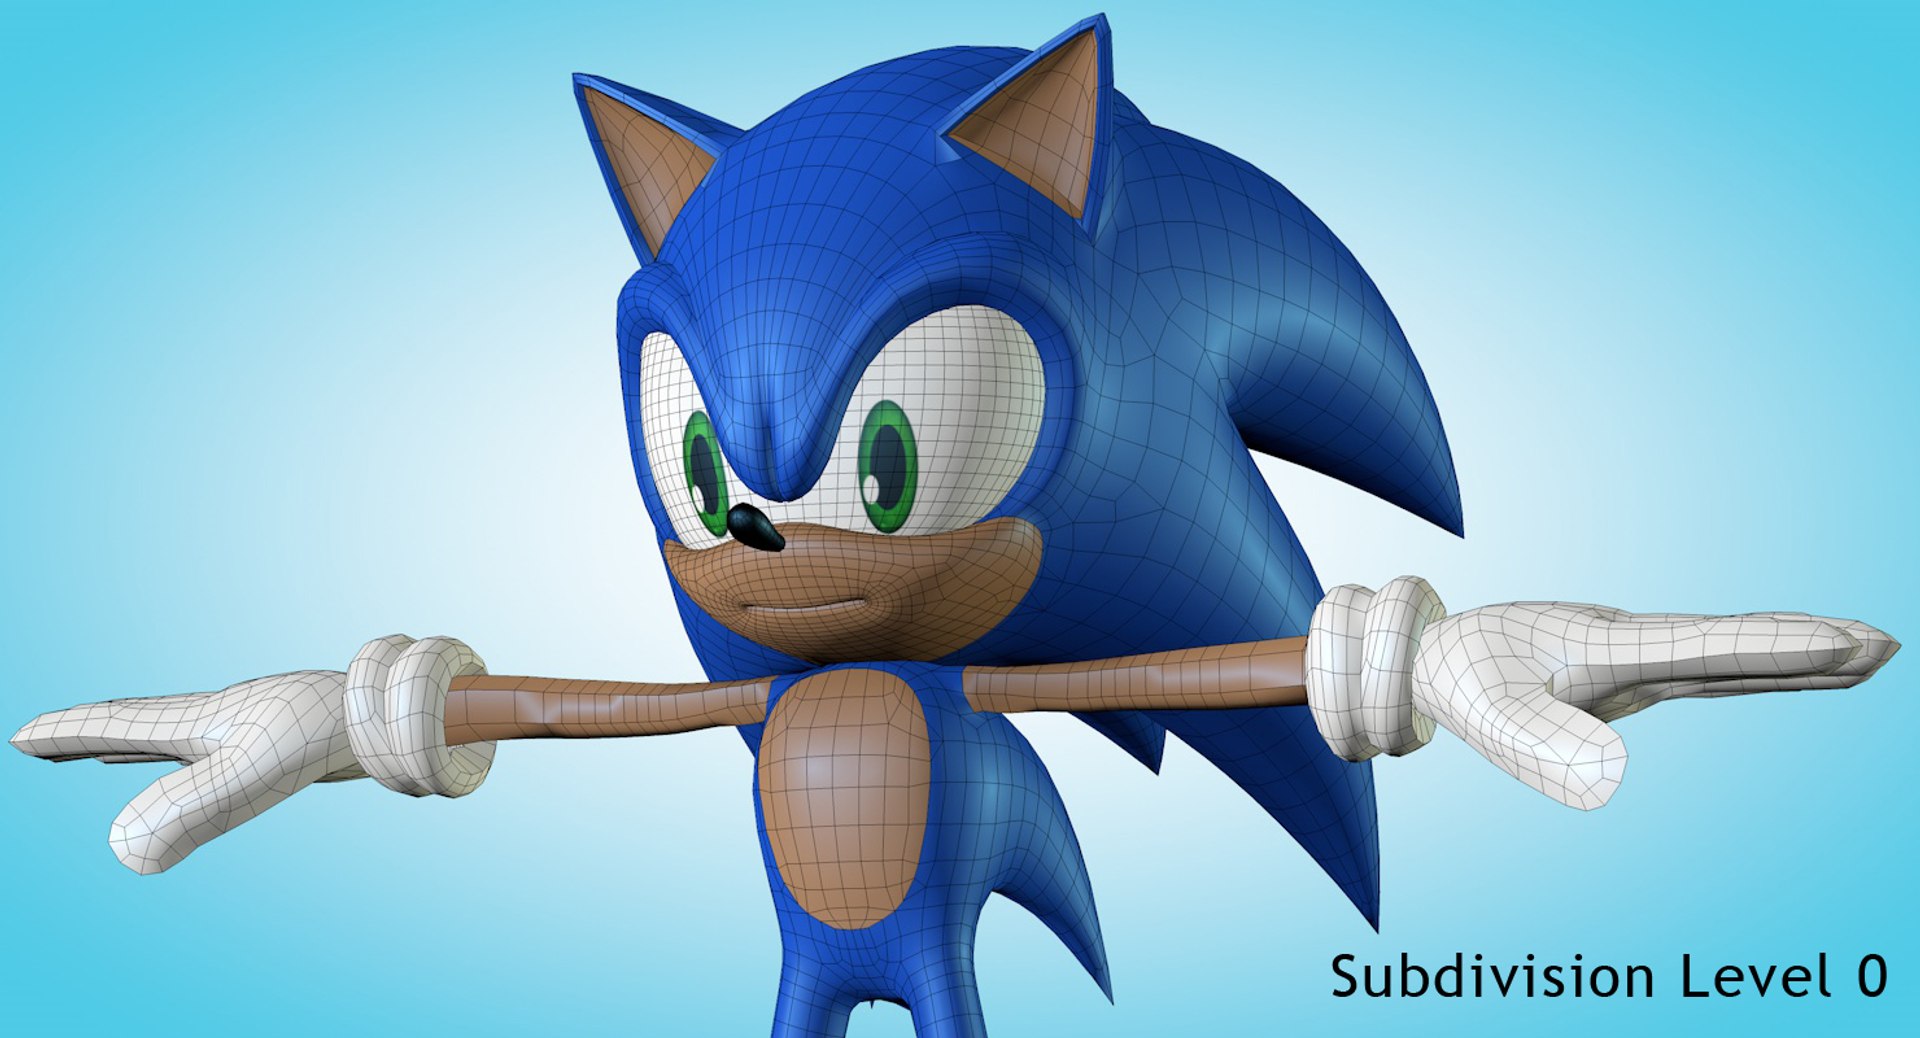 Sonic e Amy Rose Modelo 3D - TurboSquid 1085207